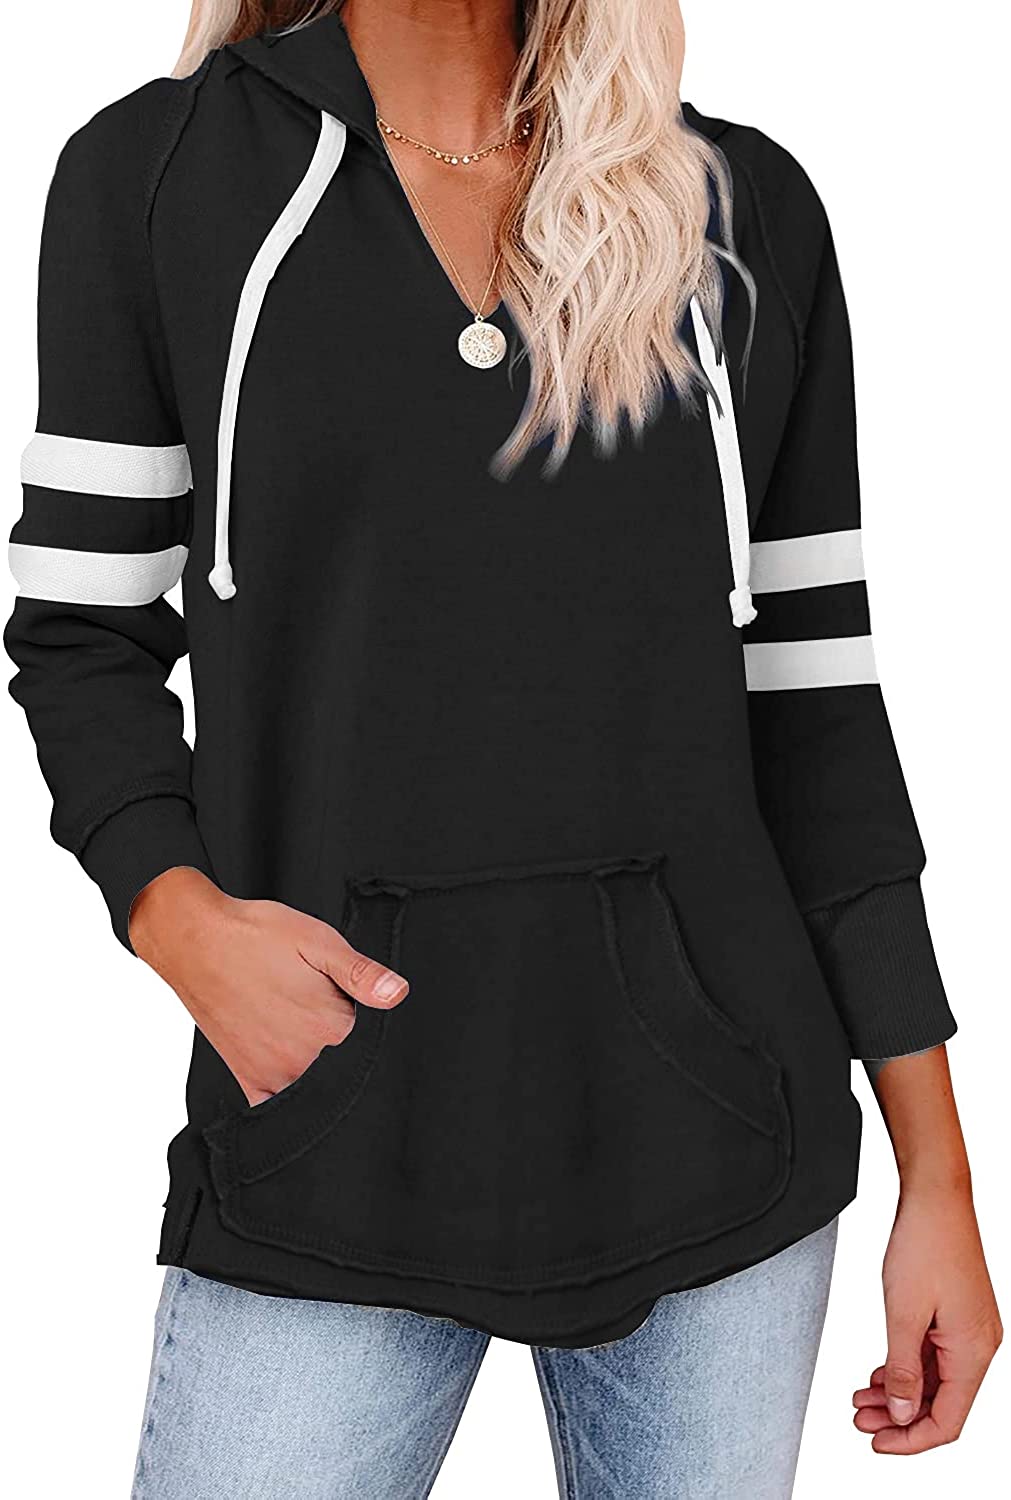 ZANFUN Oversized Sweatshirts for Women Casual Stripe Print Long Sleeve Loose Hoodies T Shirt Plus Size Blouse Tunic Tops 